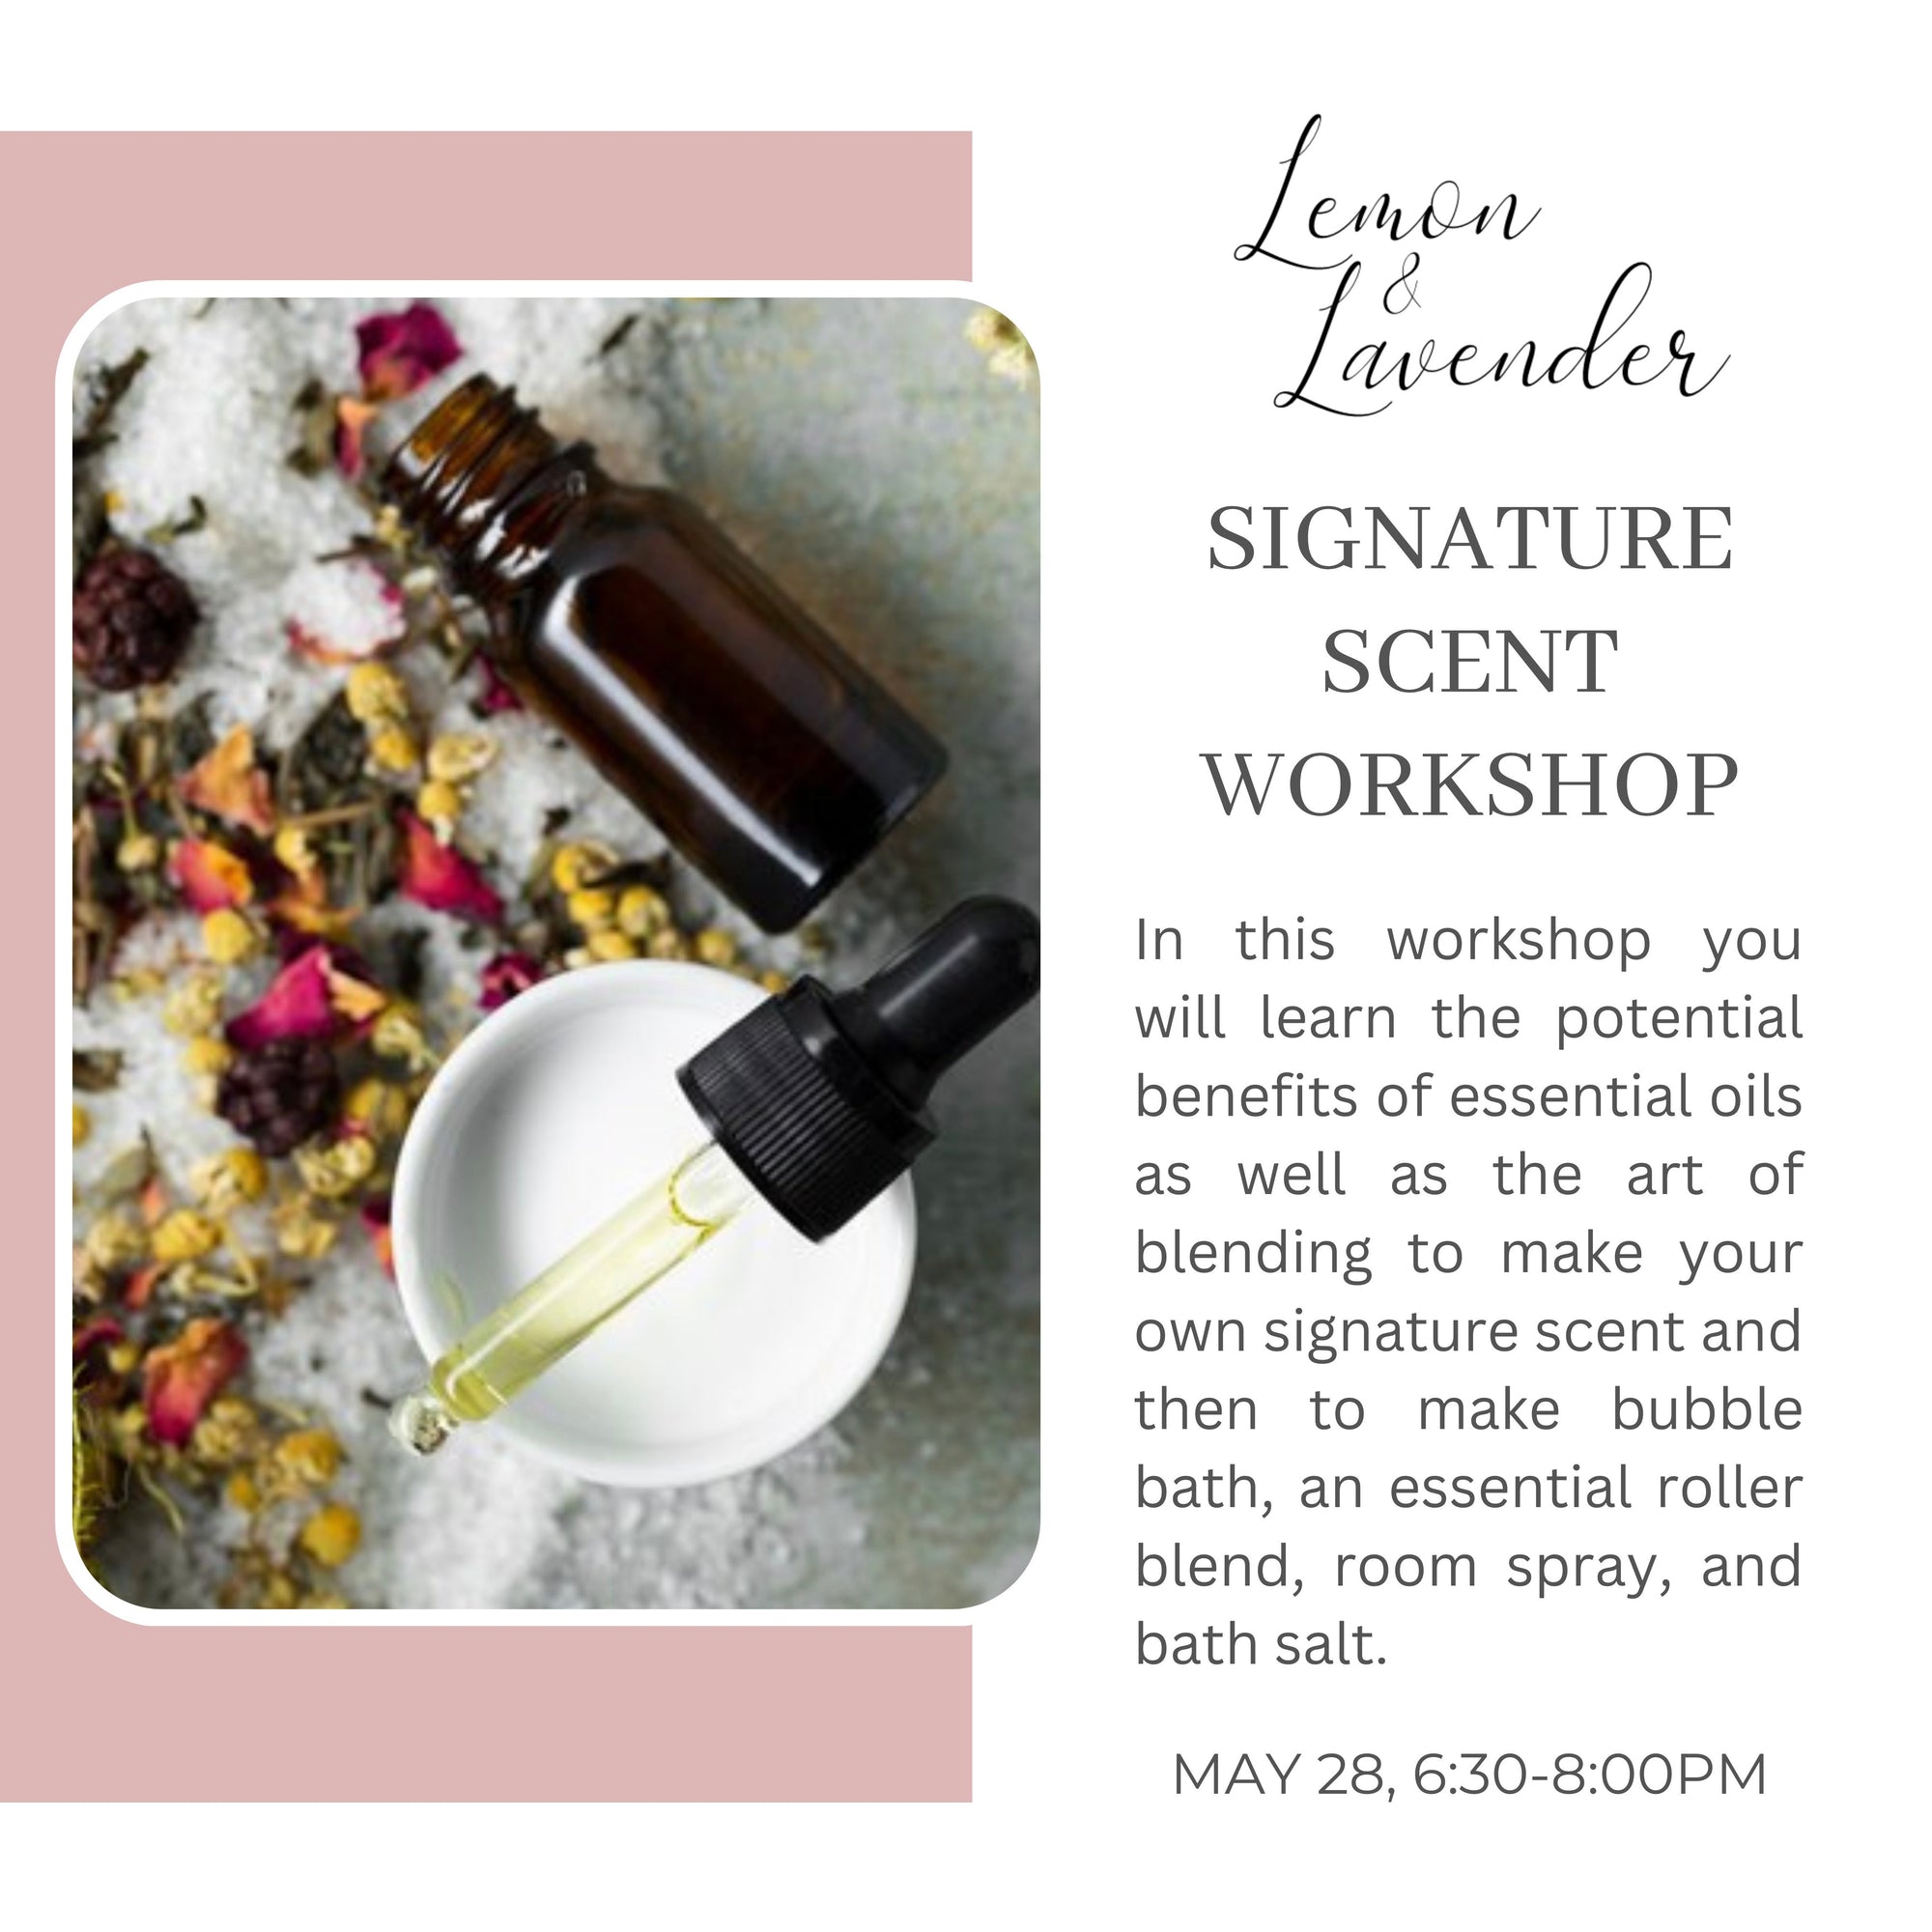 Signature Scent Workshop, May 28, 6:30-8:00pm